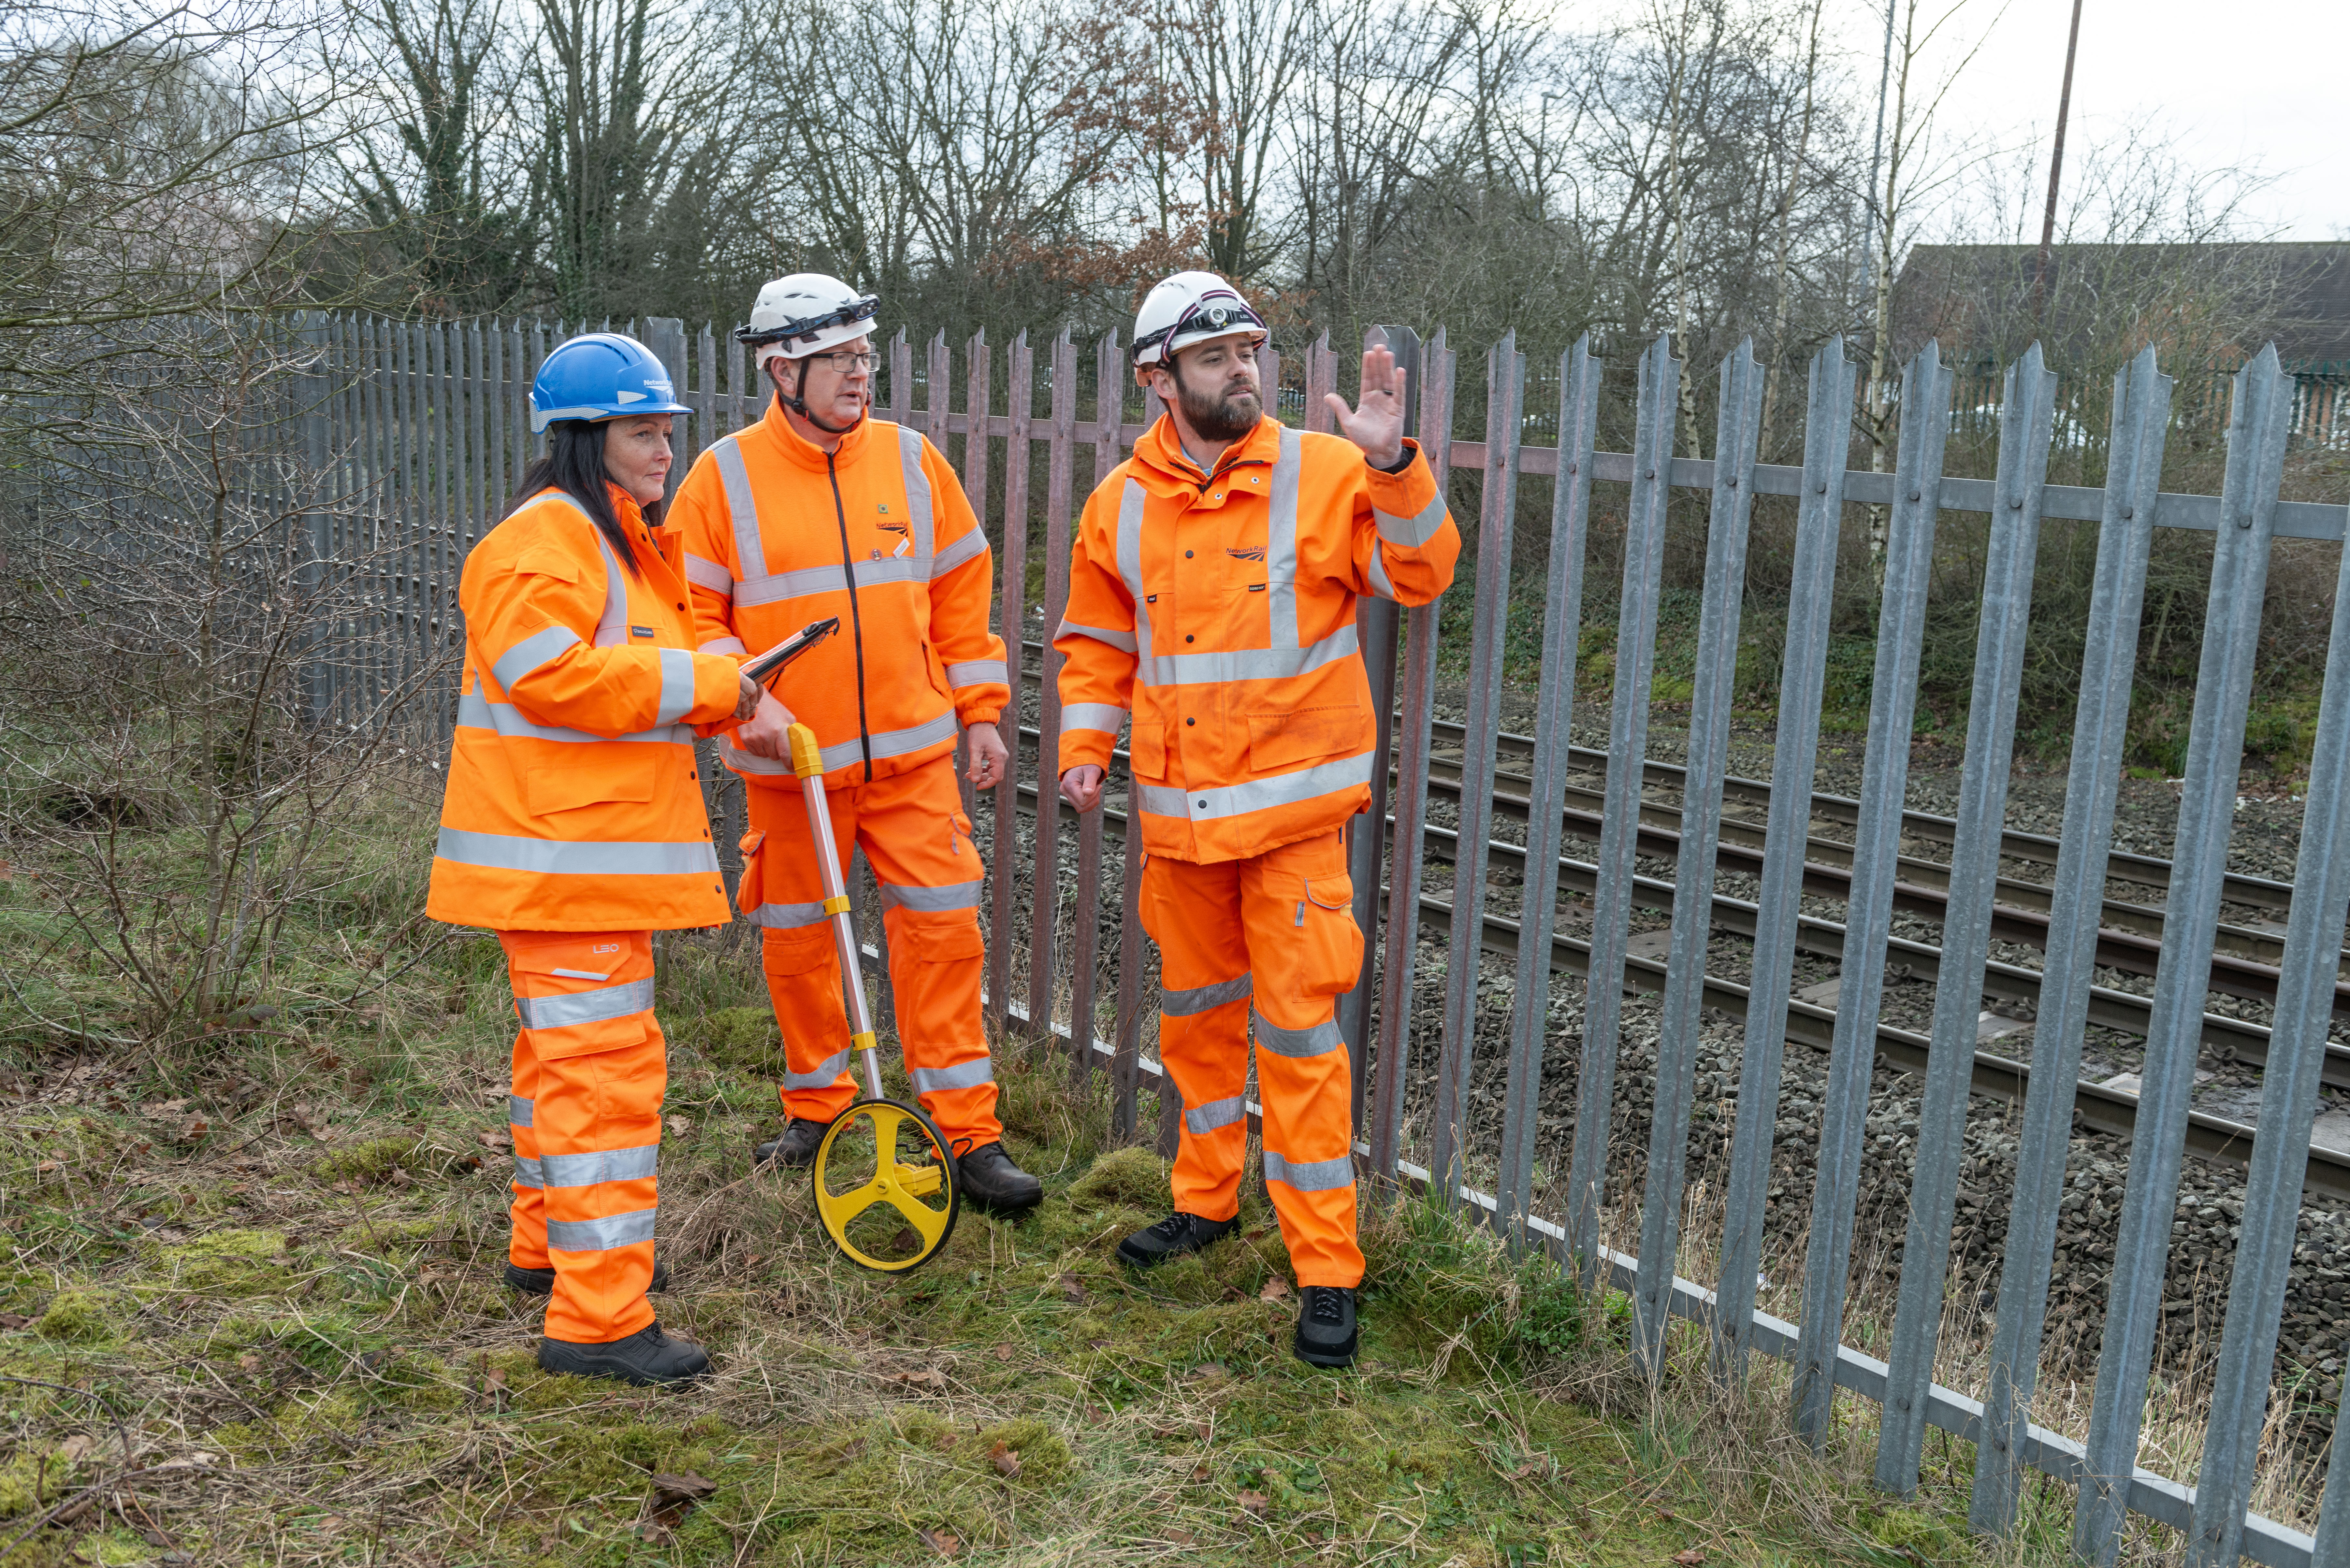 Network Rail staff survey the site